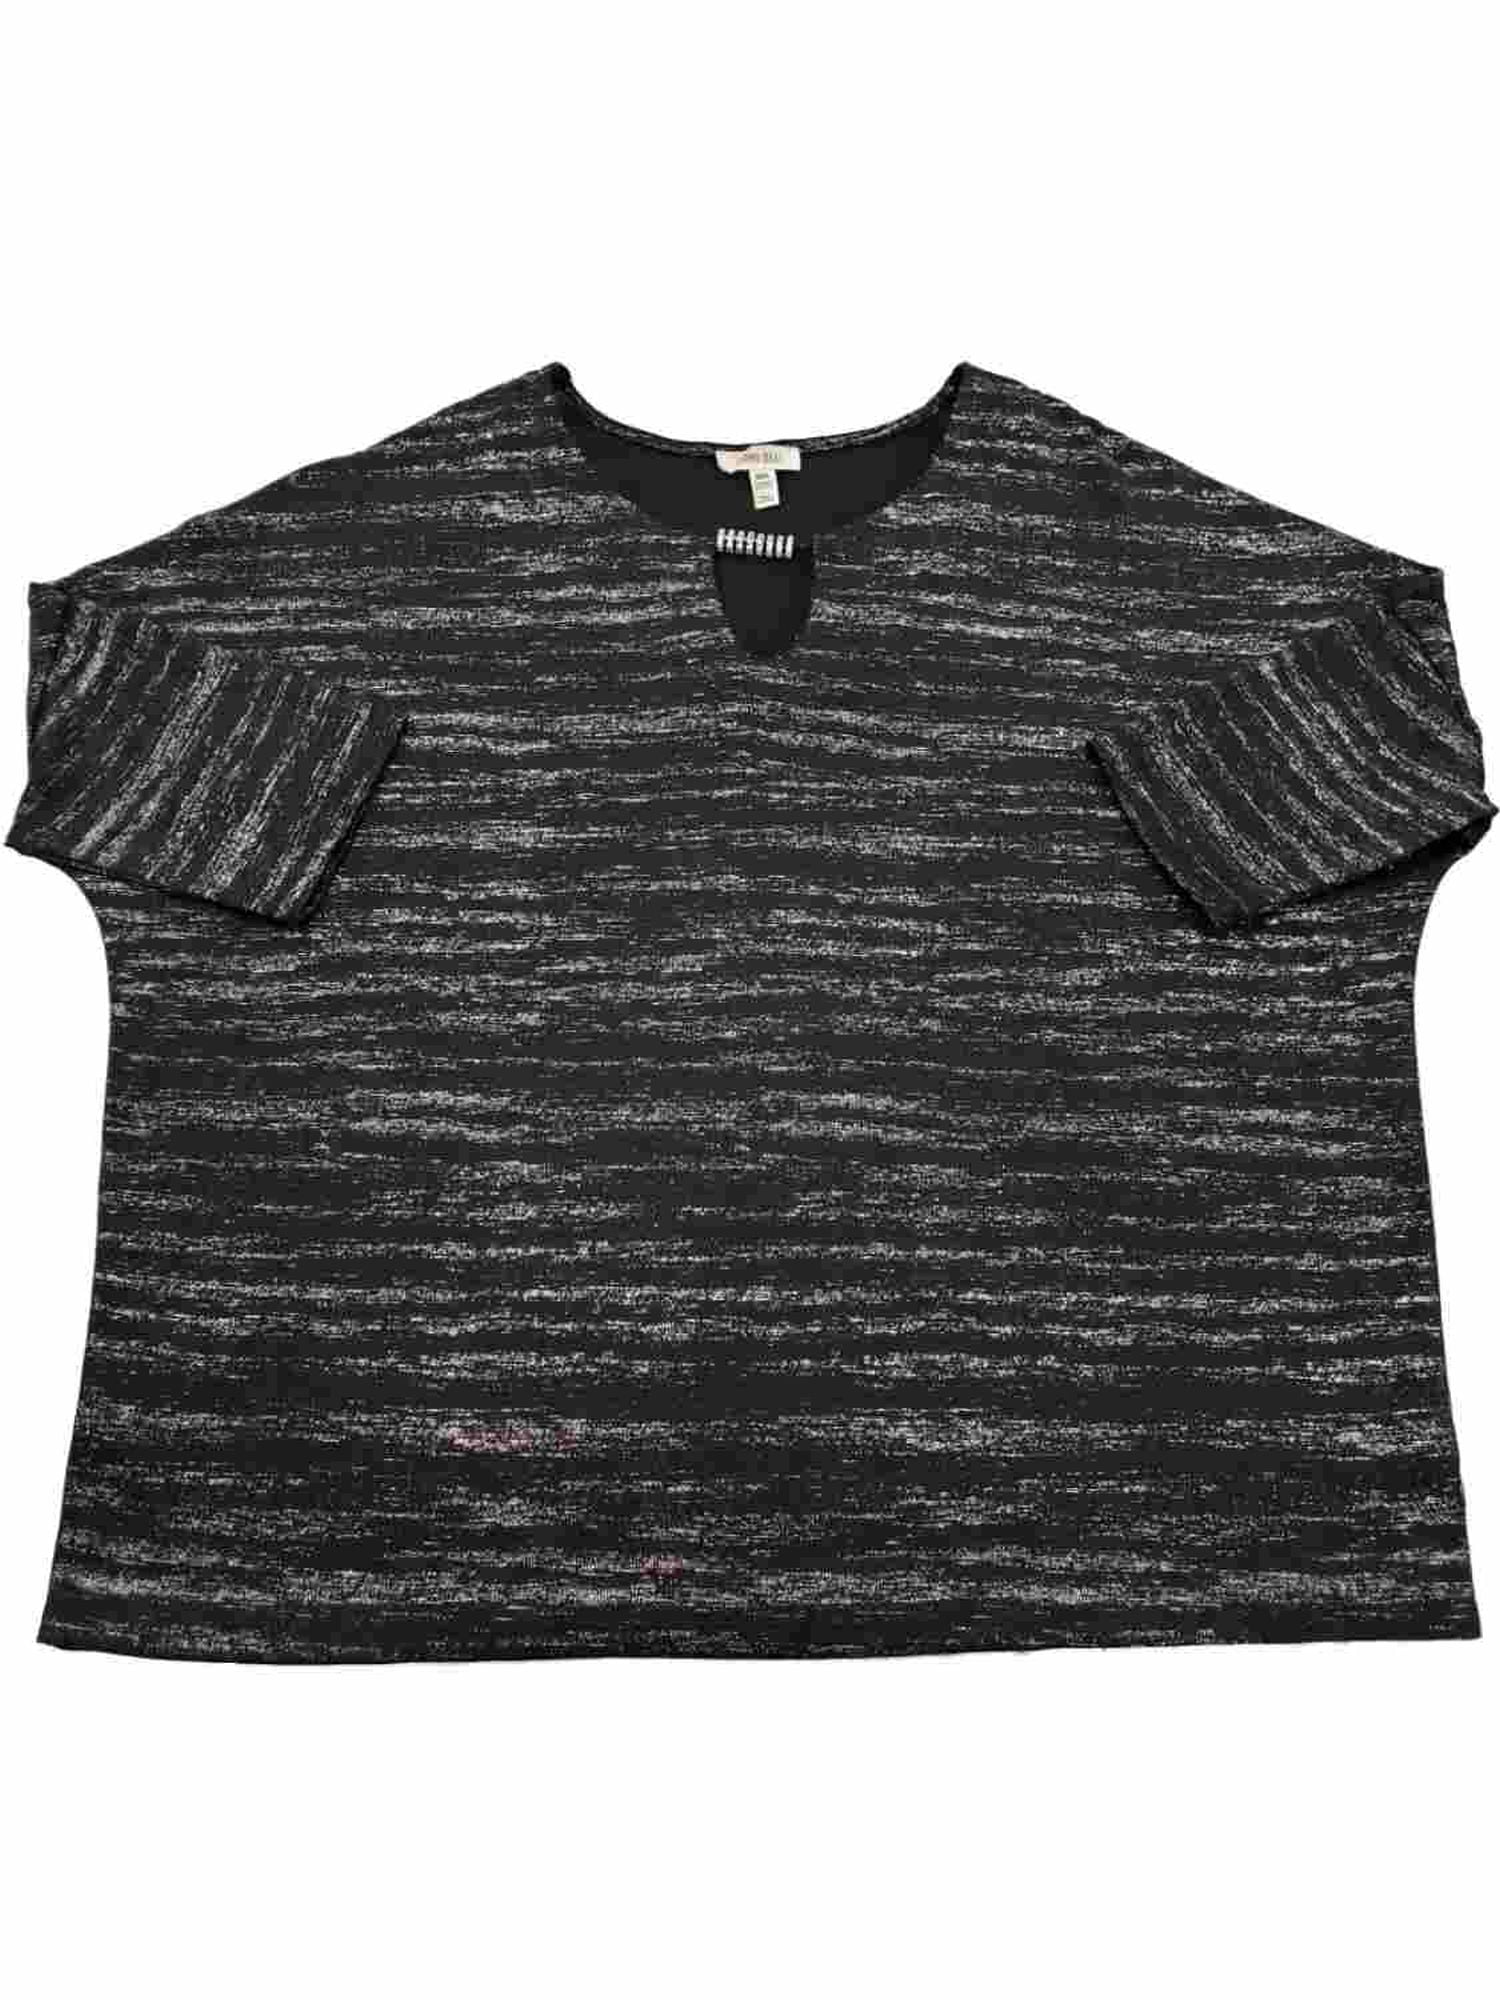 Womens Black Silver Sparkle Embellished Neckline Shirt T-Shirt Top ...